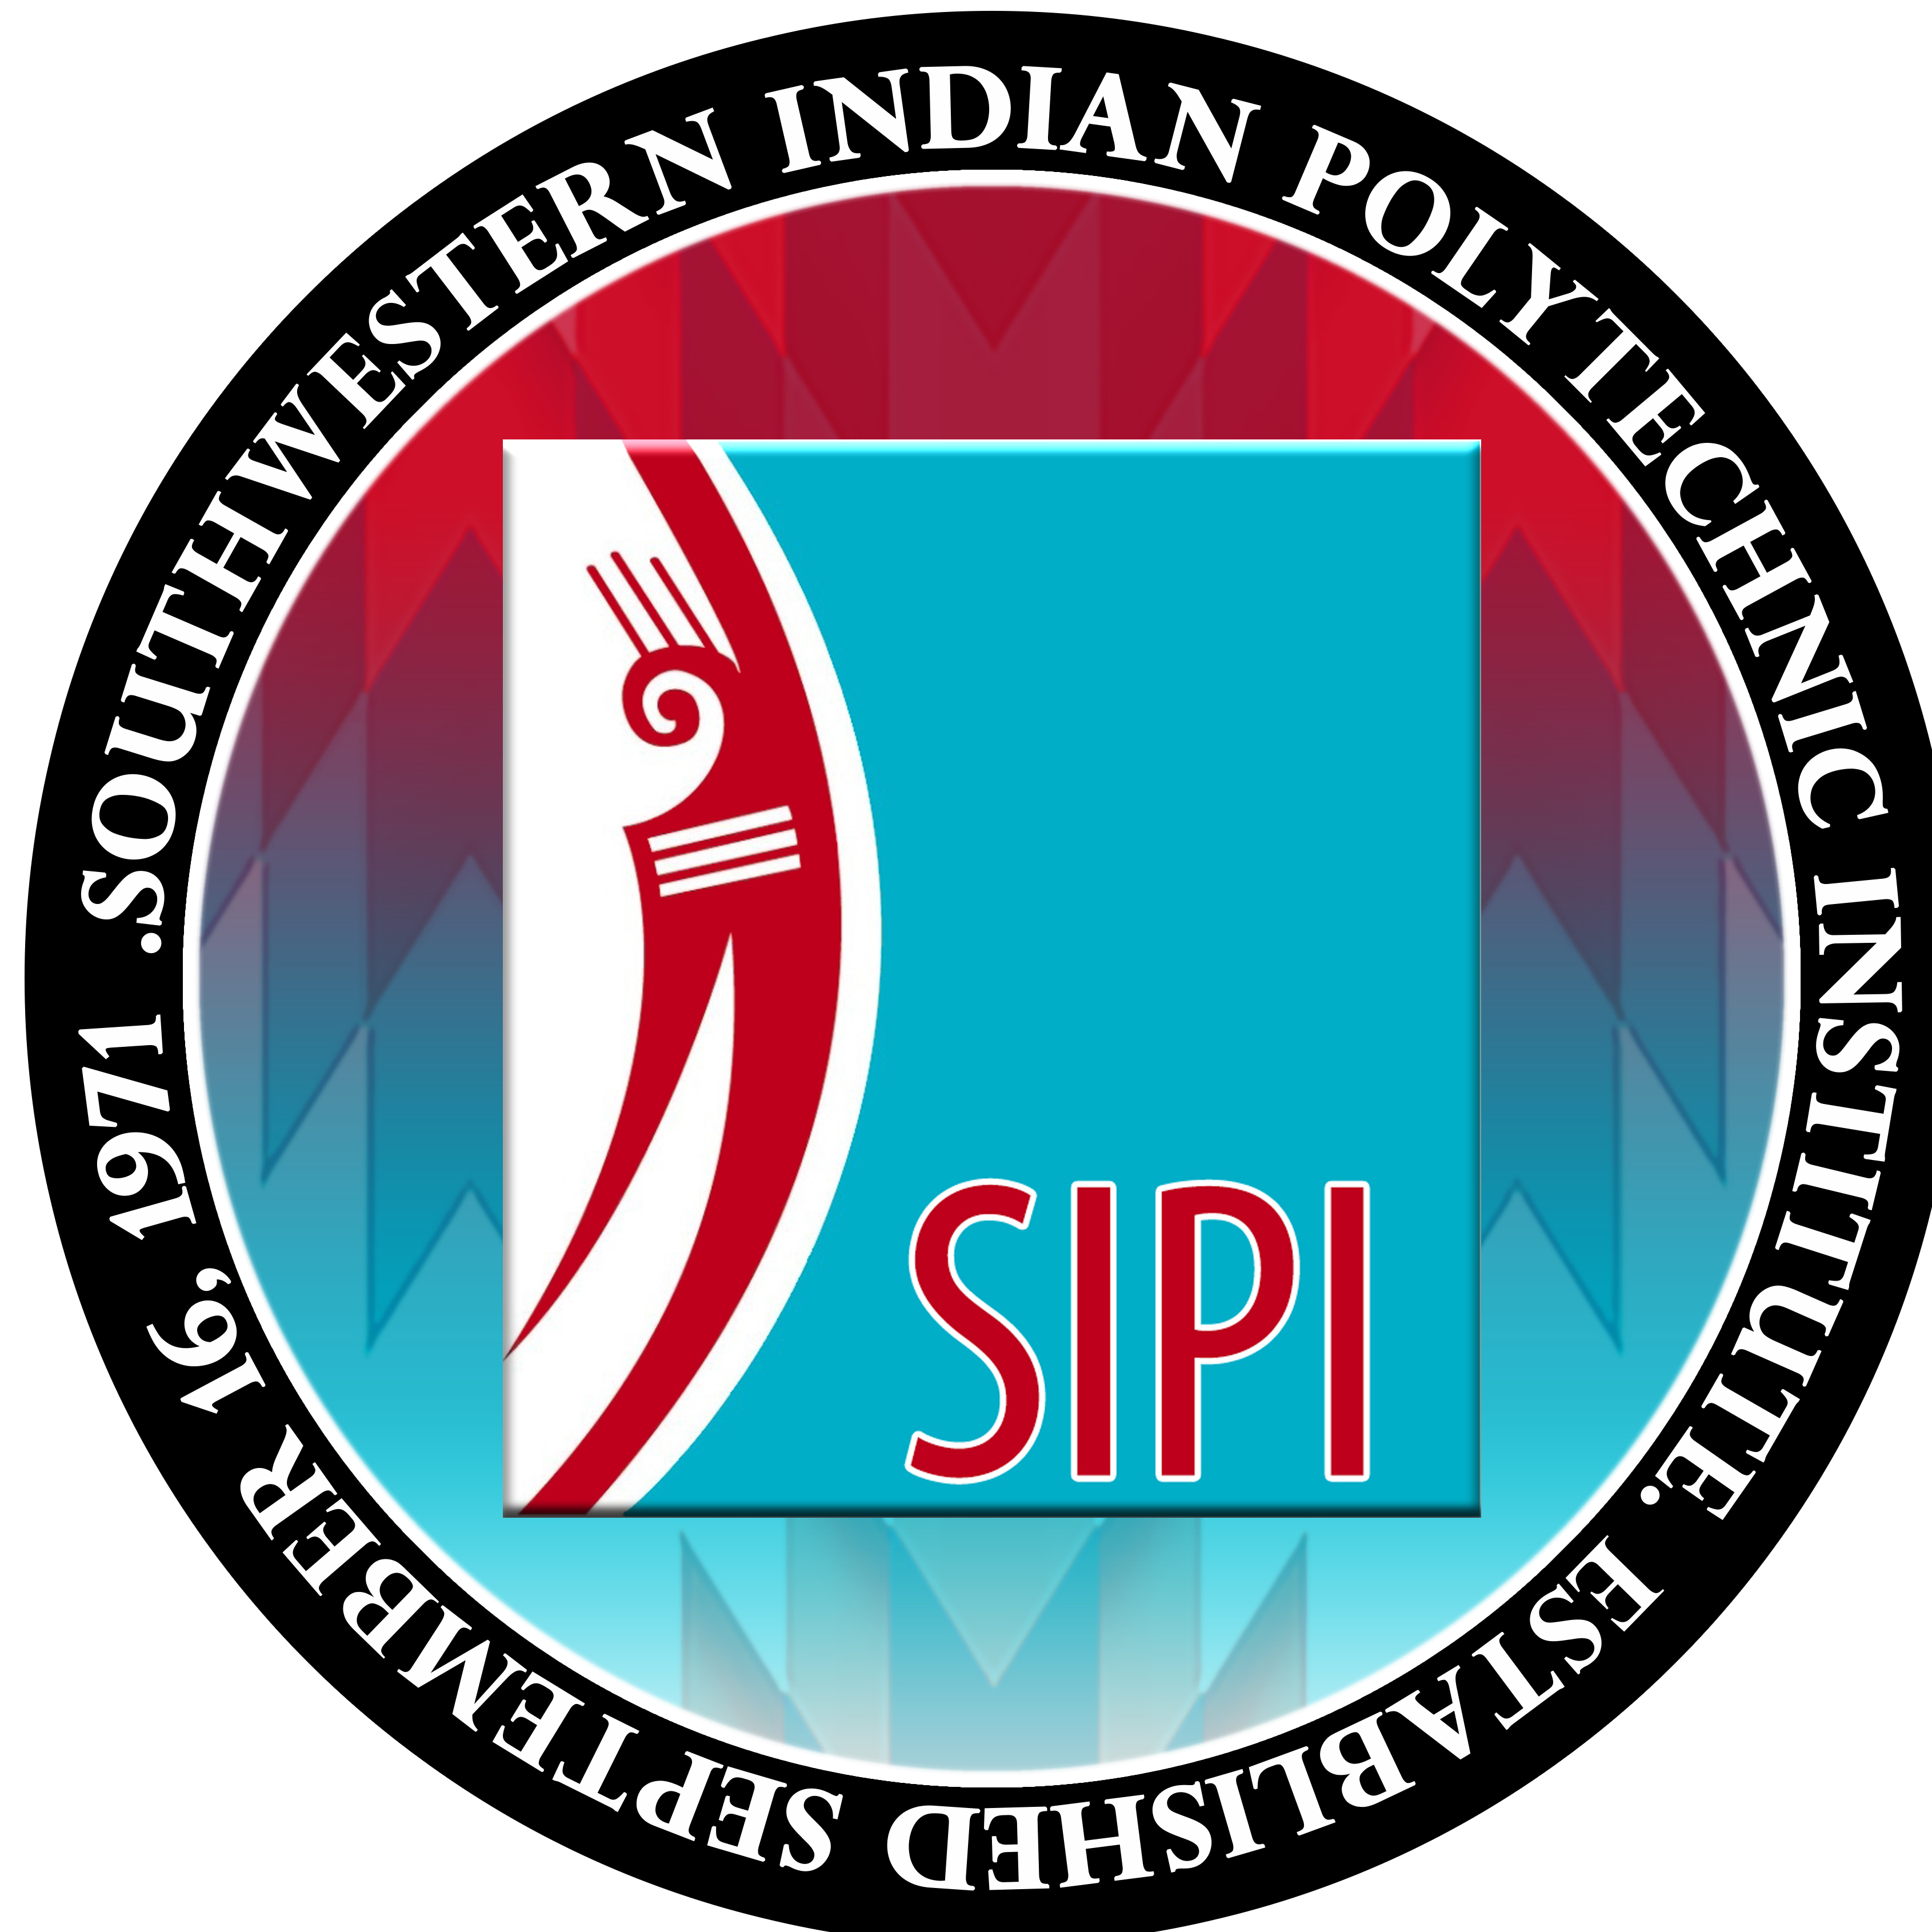 School logo for Southwestern Indian Polytechnic Institute in Albuquerque NM